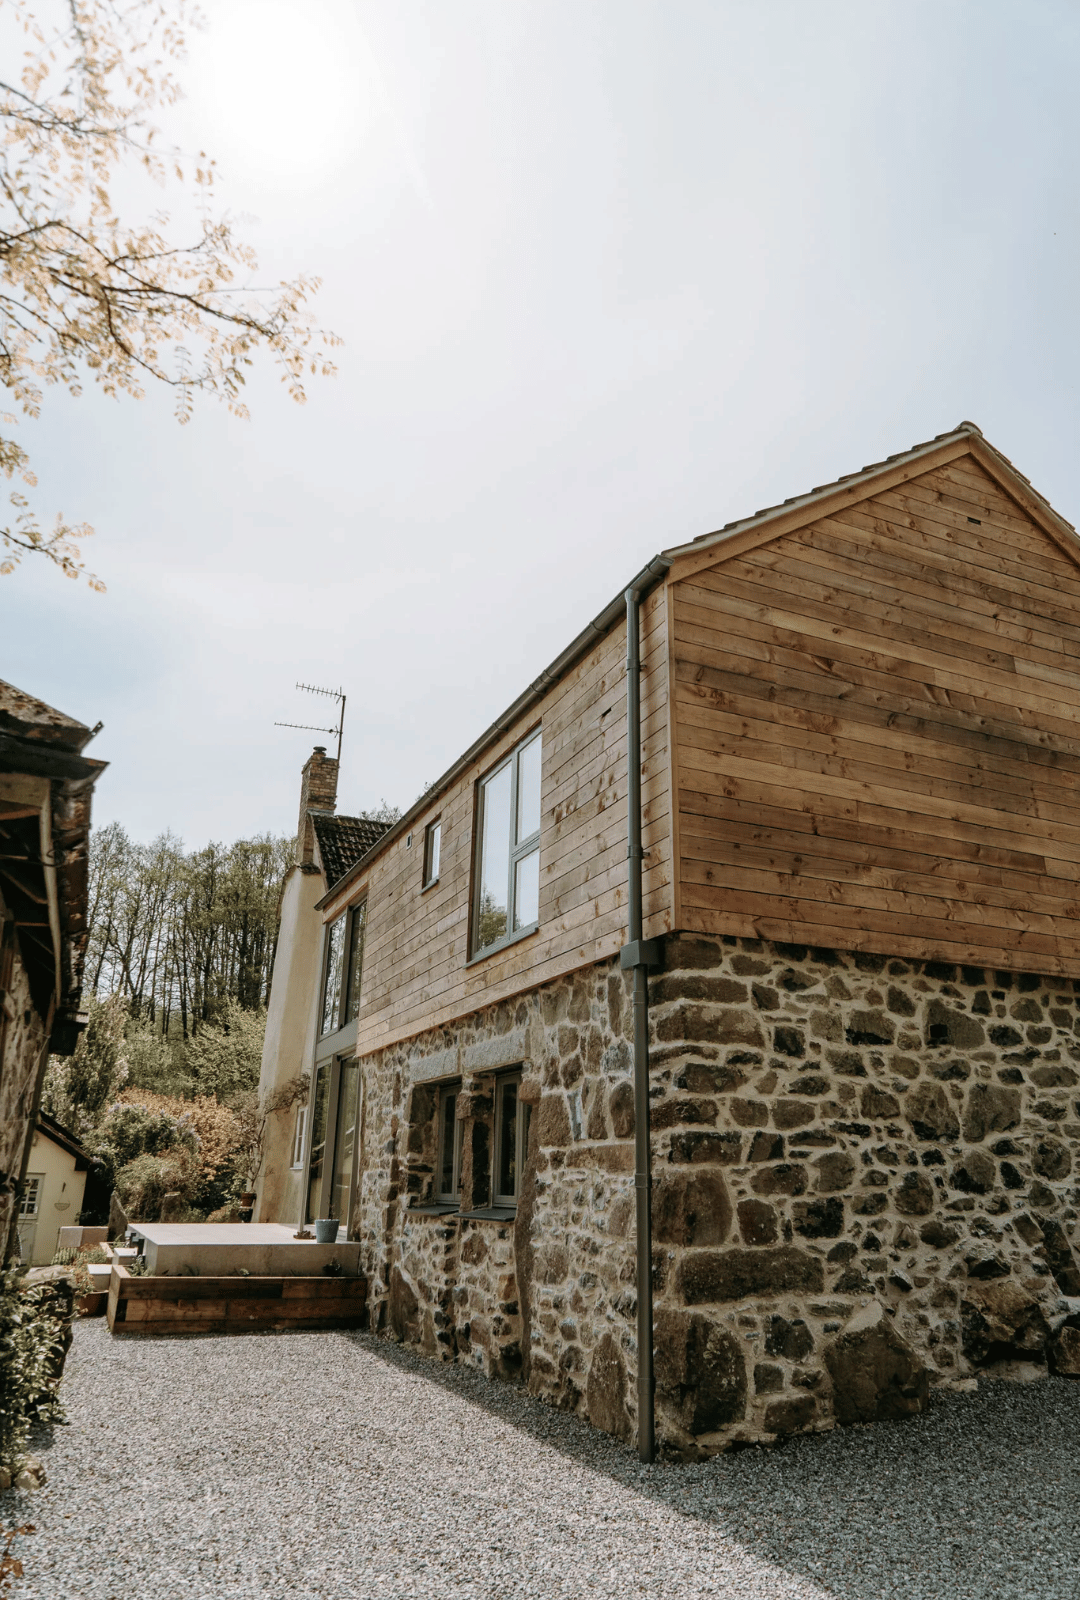 Armada property stone farm project - Beautiful rustic farm house - Property Renovations in Devon